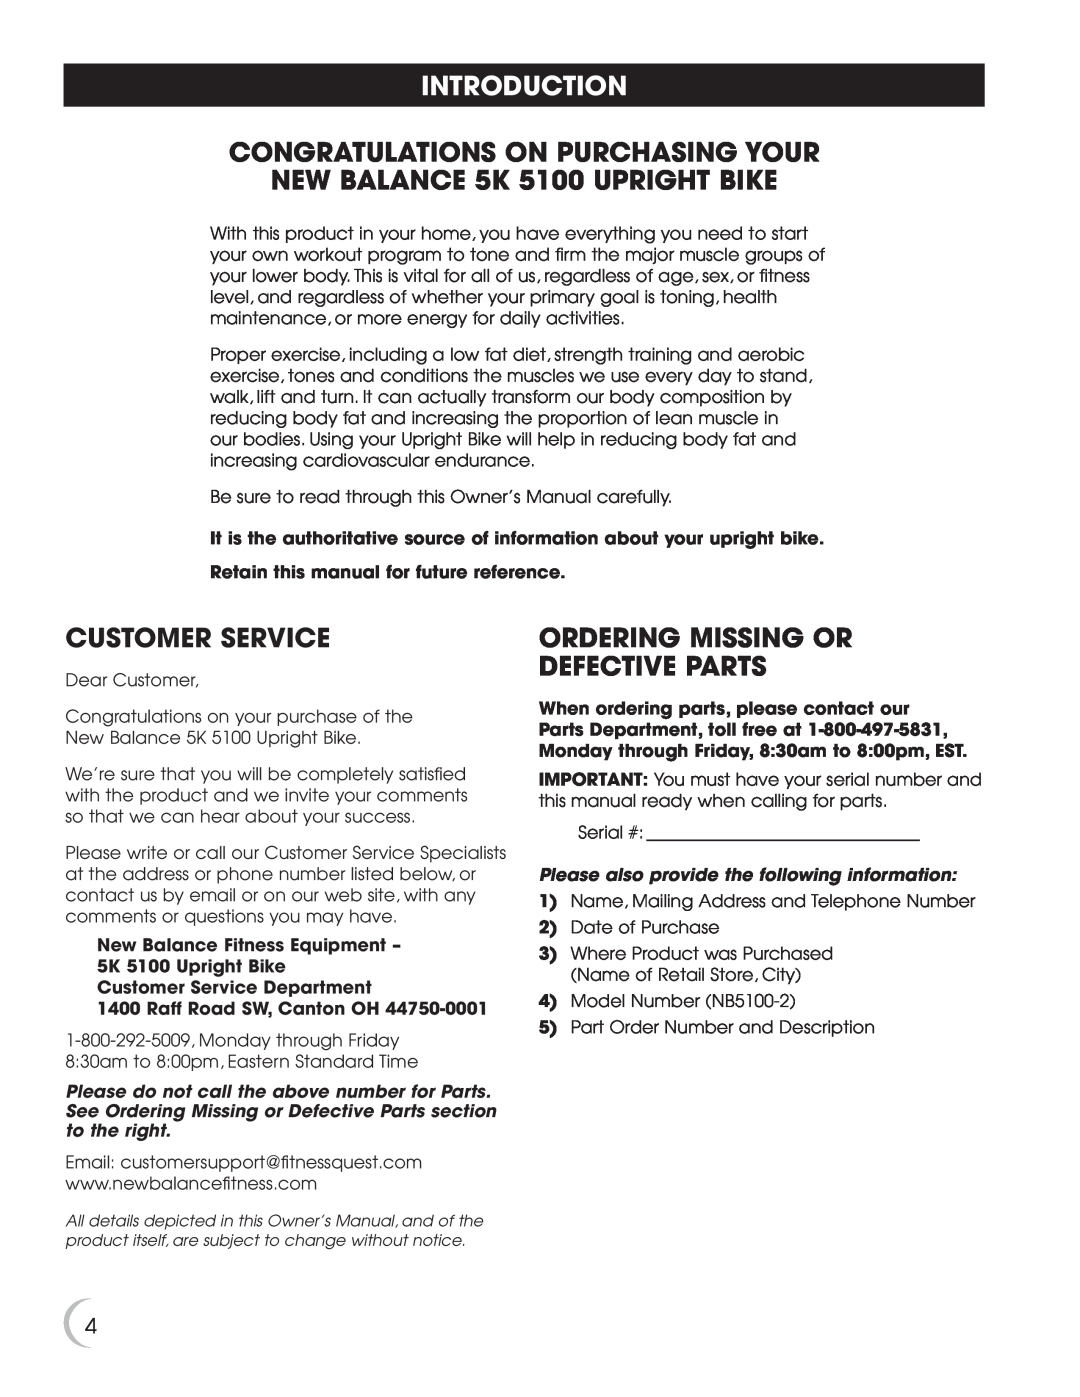 New Balance Introduction, CONGRATULATIONS ON PURCHASING YOUR NEW BALANCE 5K 5100 UPRIGHT BIKE, Customer Service 